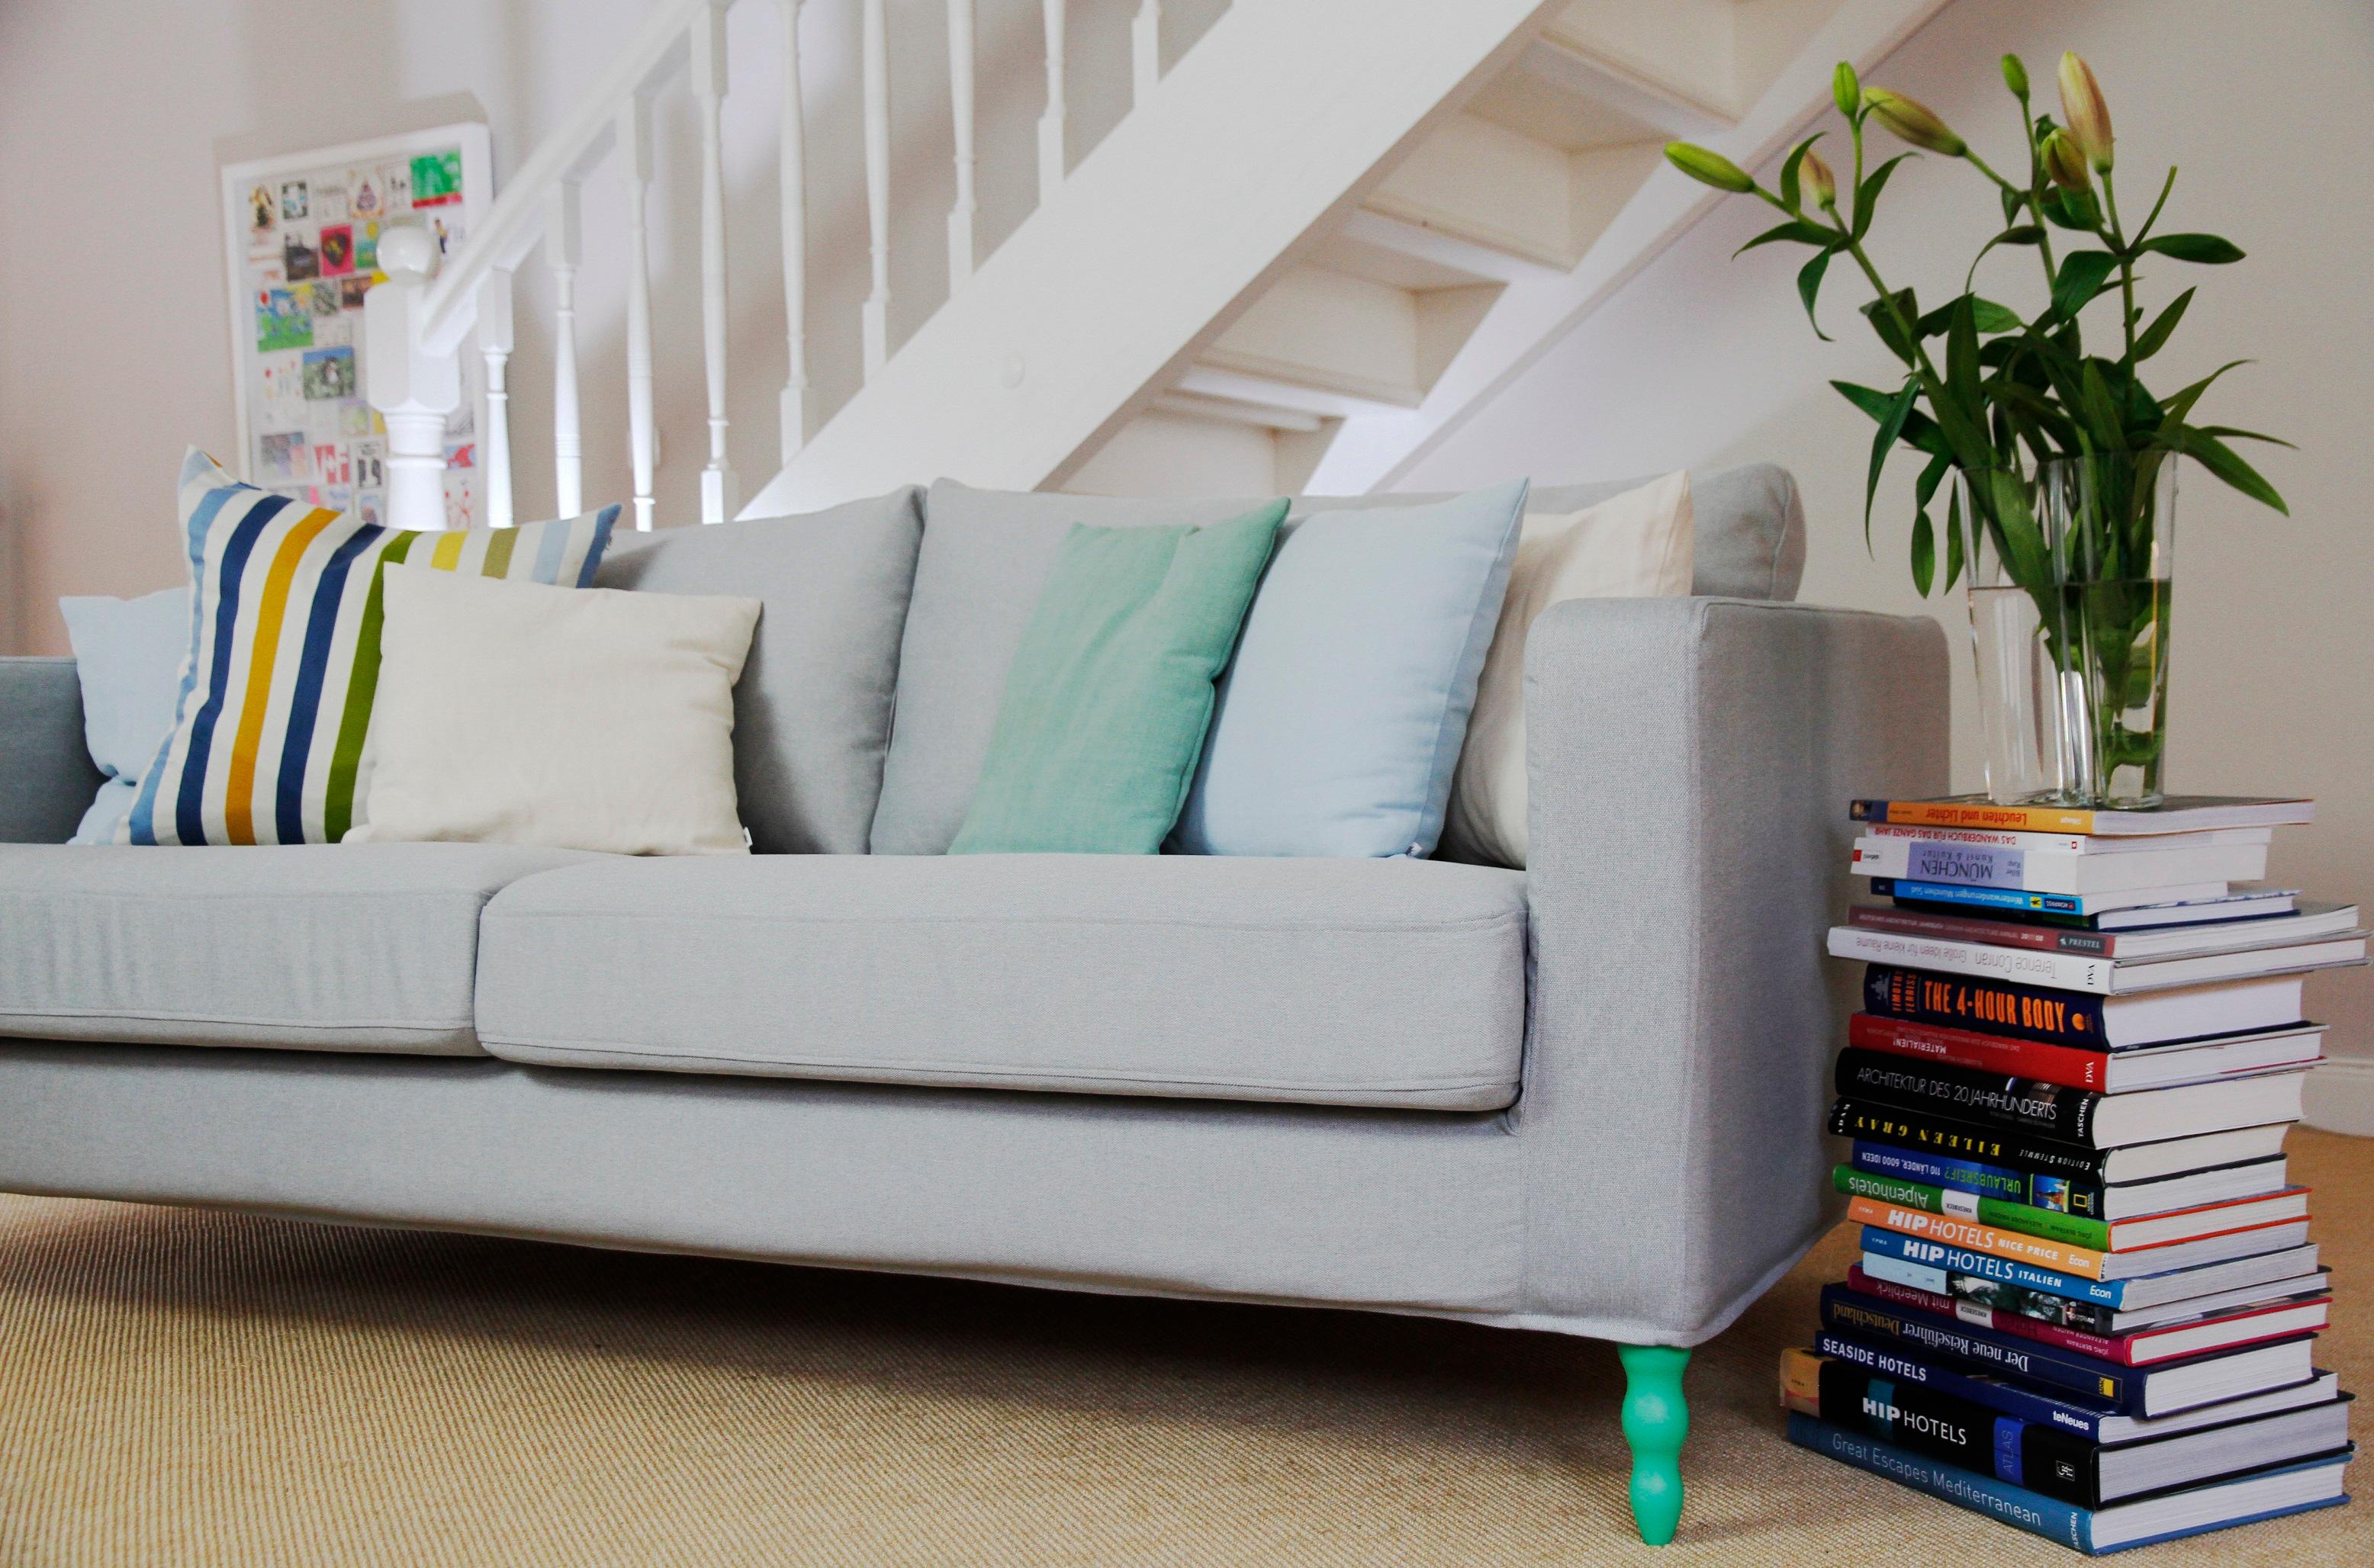 Saustarkes Sofa! #wohnzimmer #ikea #sofa ©Saustark Design GmbH